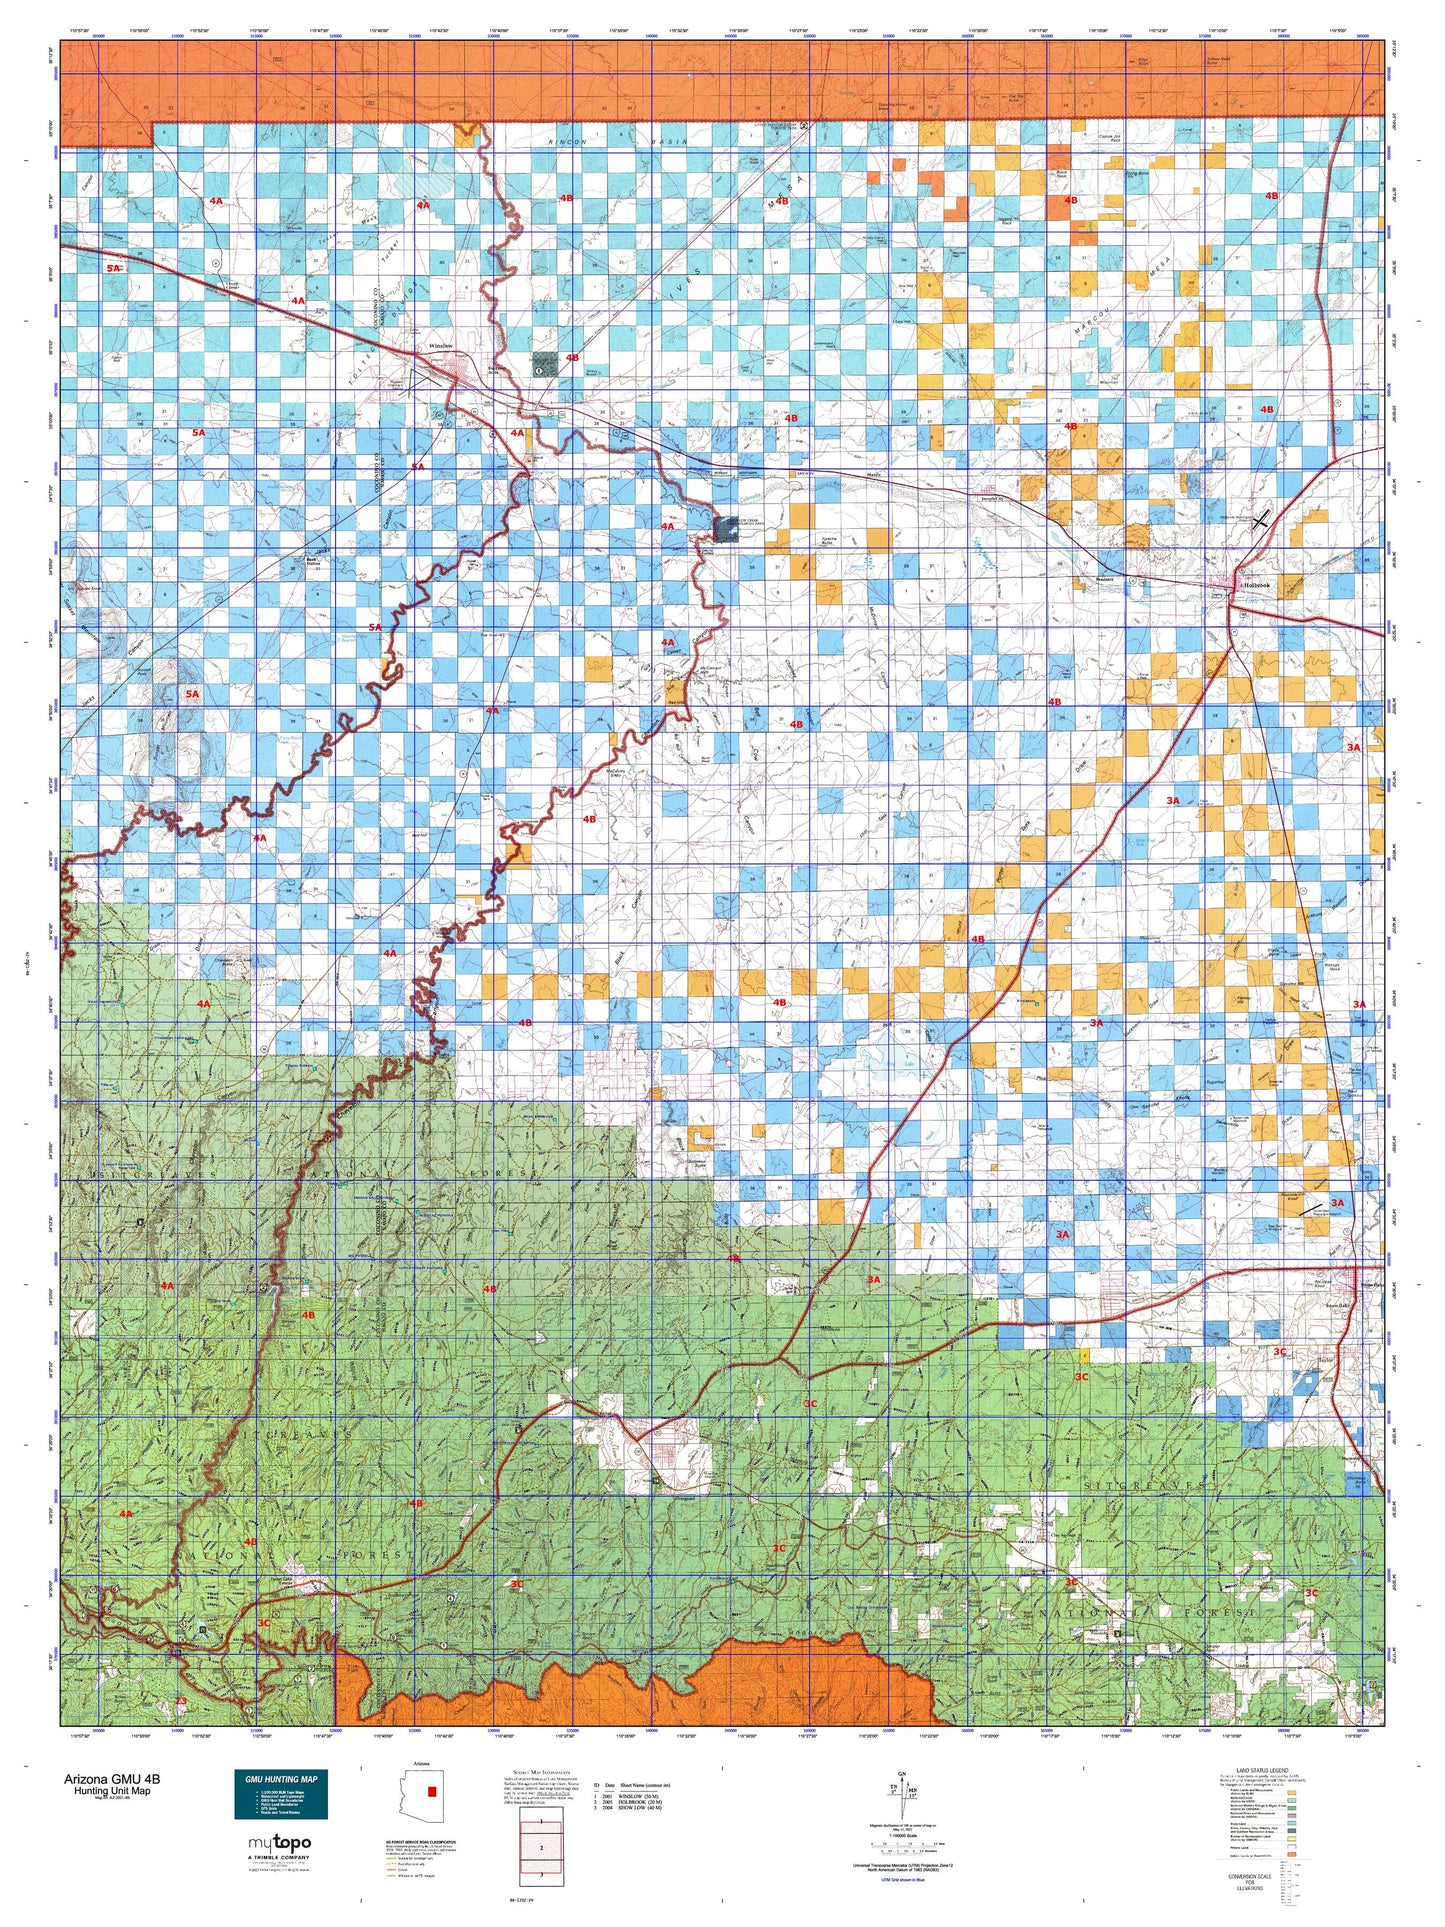 Arizona GMU 4B Map Image